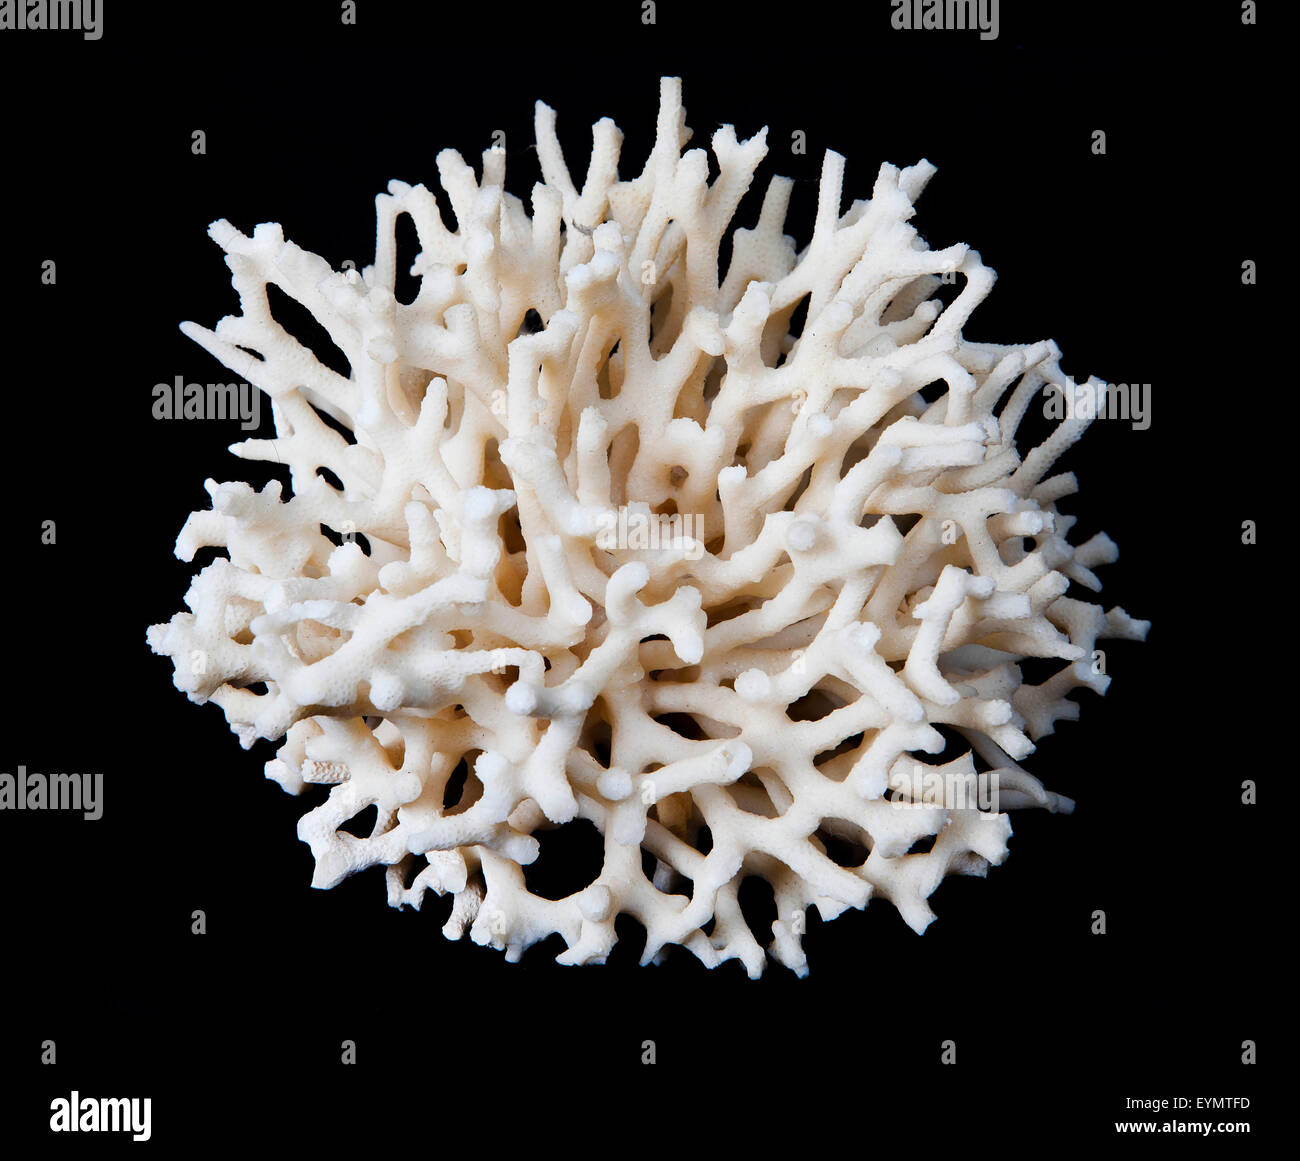 coral, illegal souvenir Stock Photo